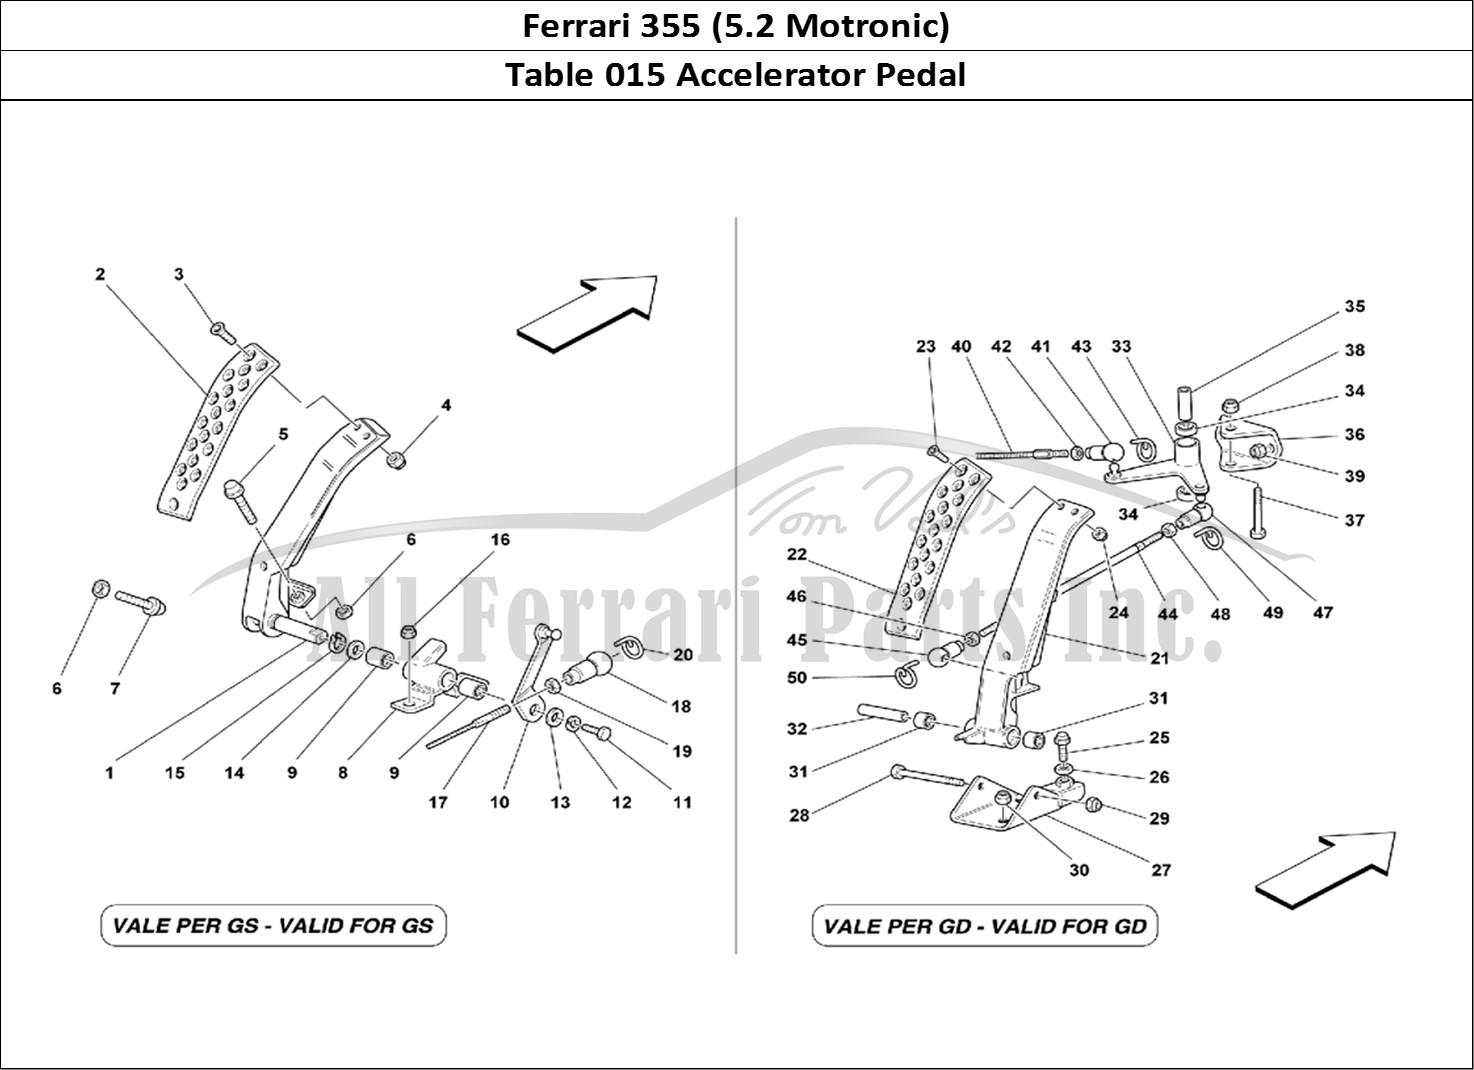 Ferrari Parts Ferrari 355 (5.2 Motronic) Page 015 Accelerator Pedal